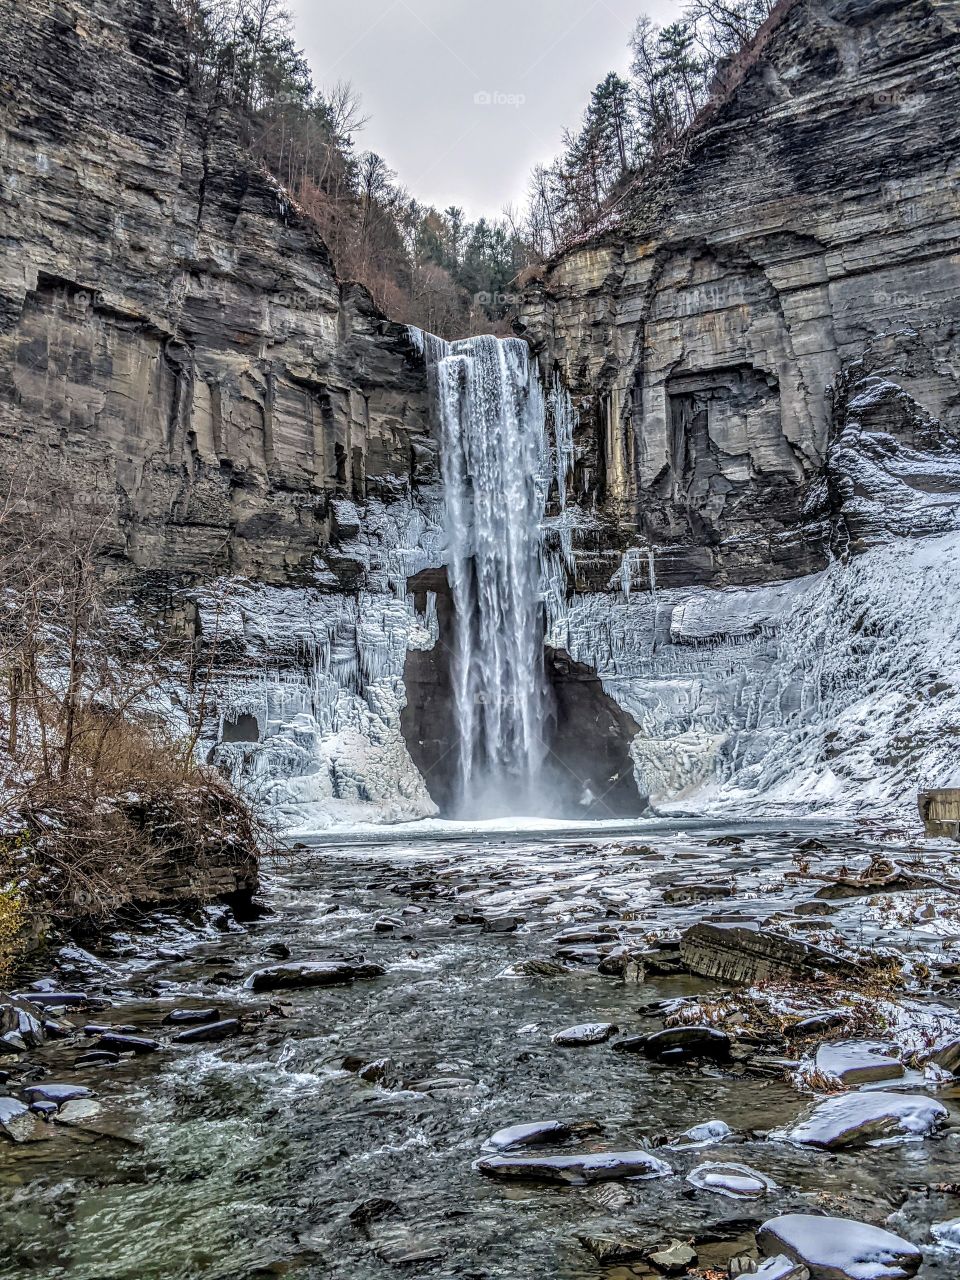 Winter wonderland waterfall! A partially frozen Taughannock Falls in Trumansburg, NY. November 2019.